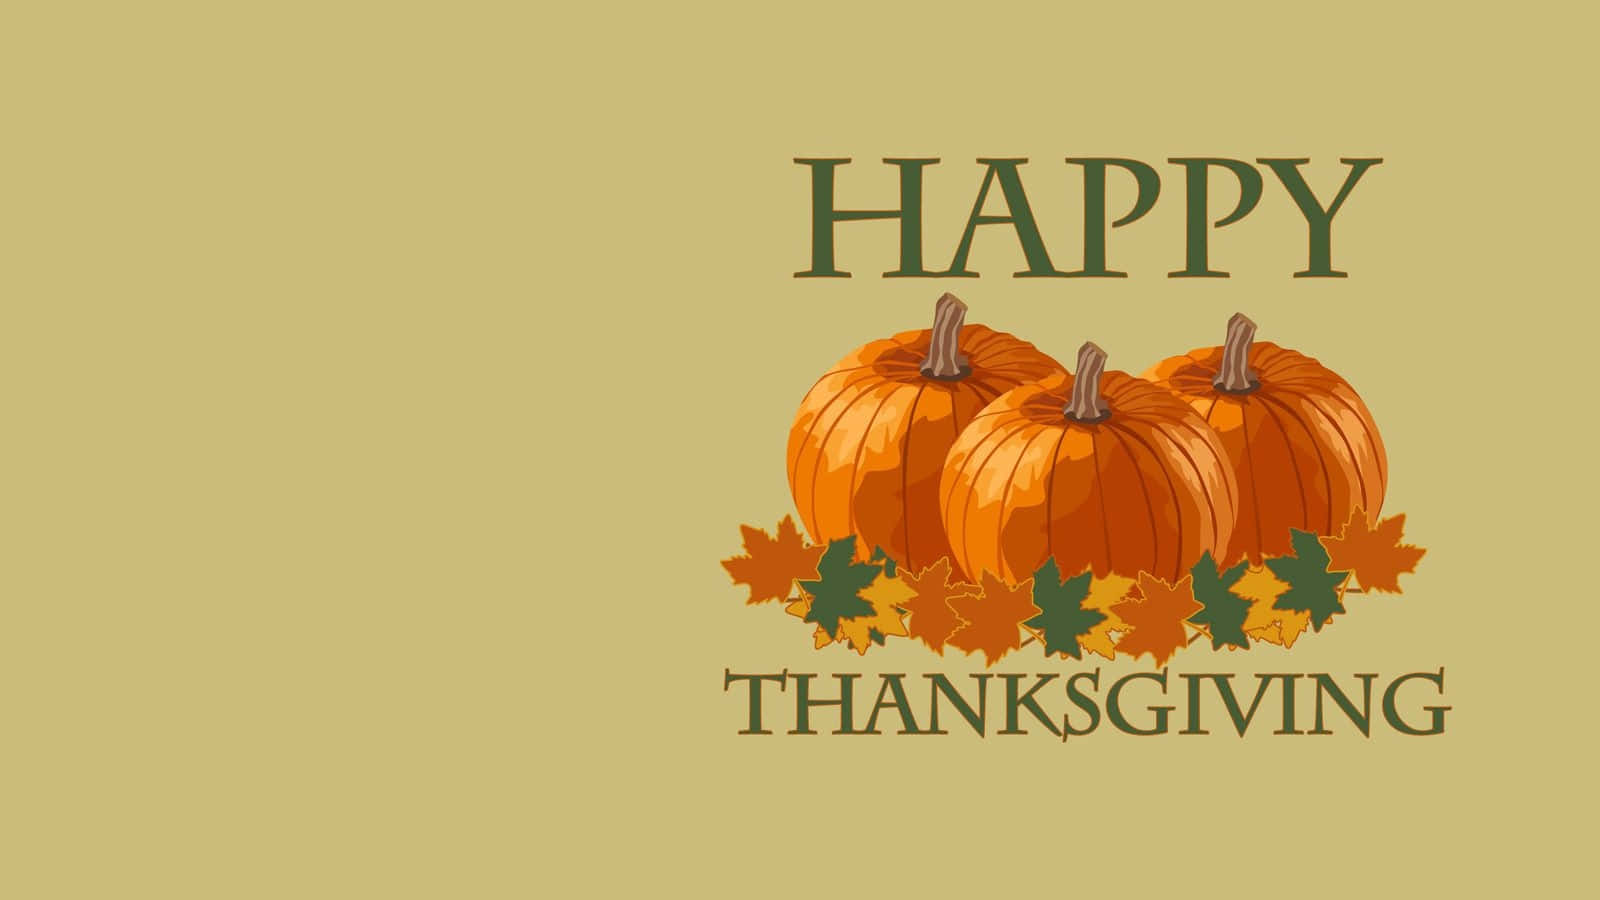 Three Pumpkins Happy Thanksgiving Greeting Card